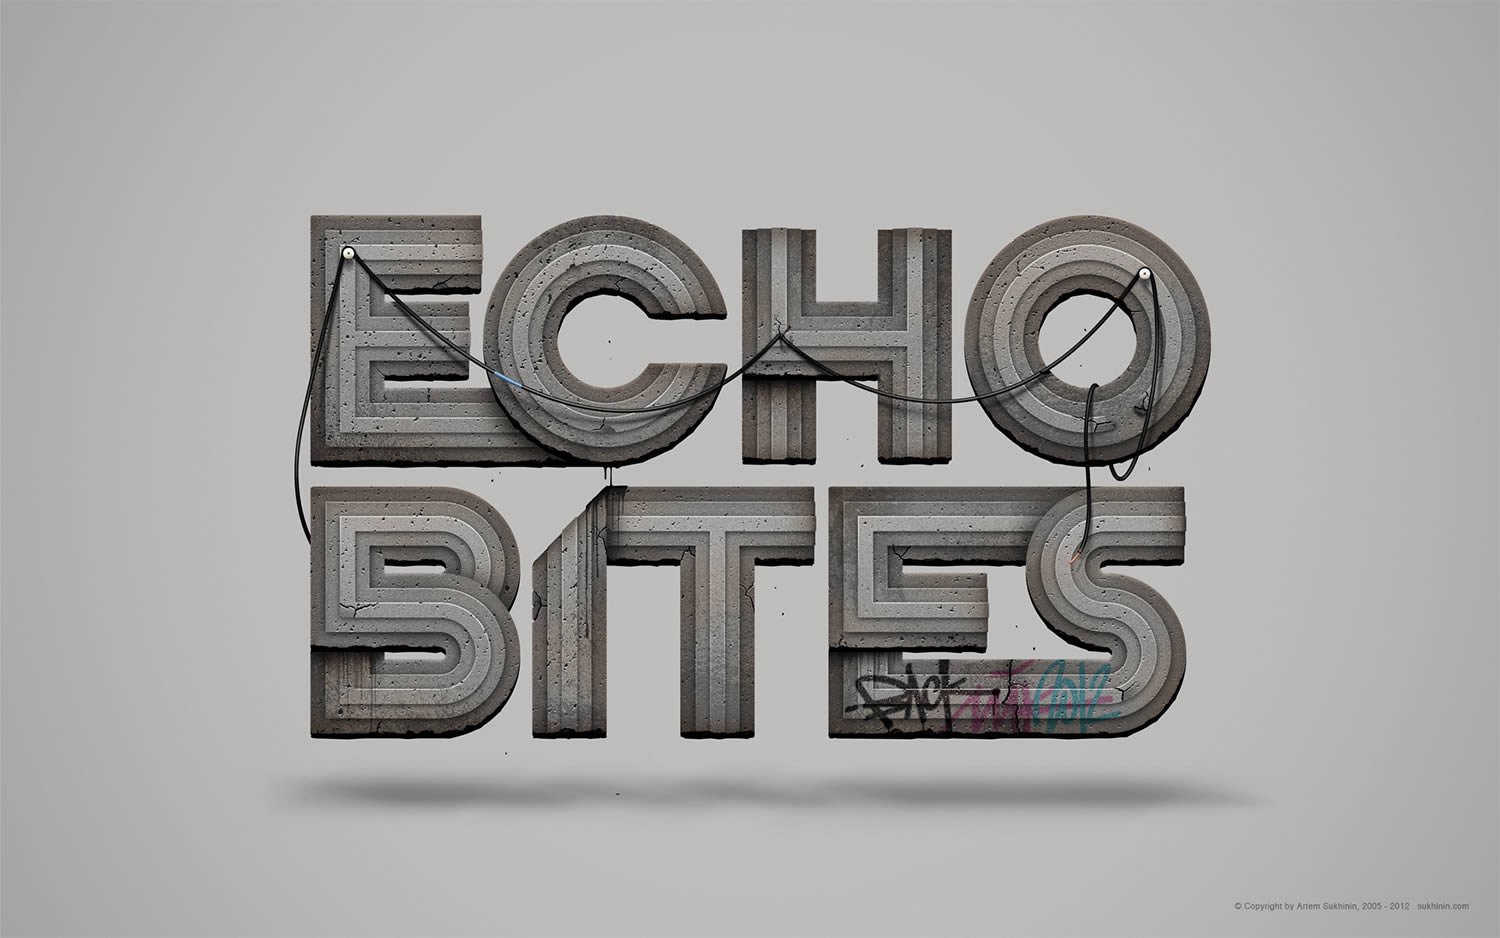 "Echo Bites" by Artern Sukhinin.